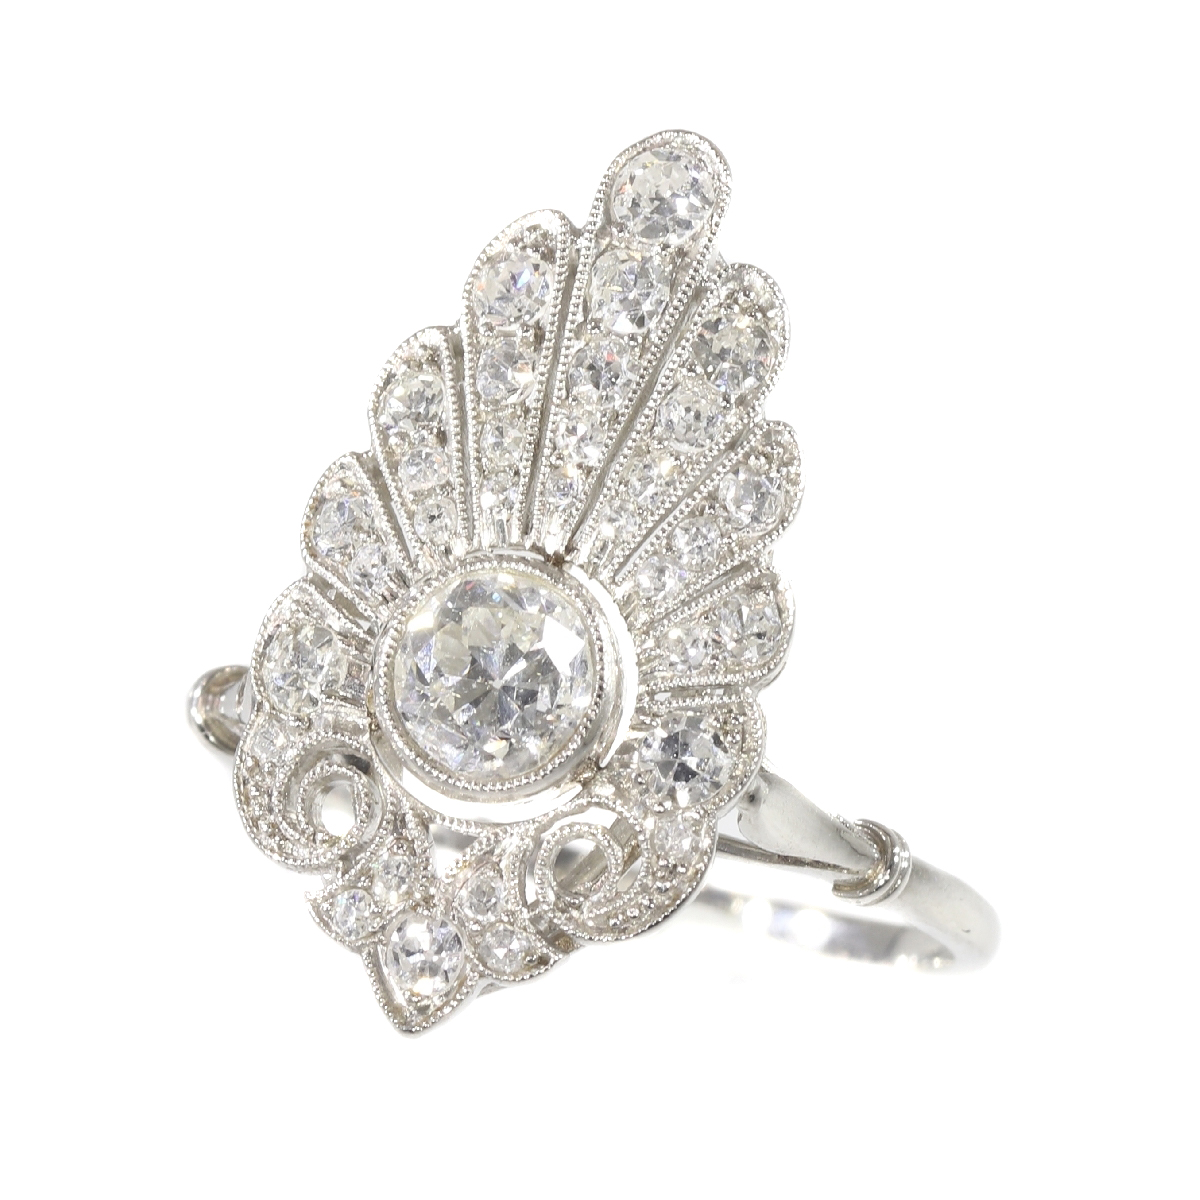 French elegant Belle Epoque diamond engagement ring platinum